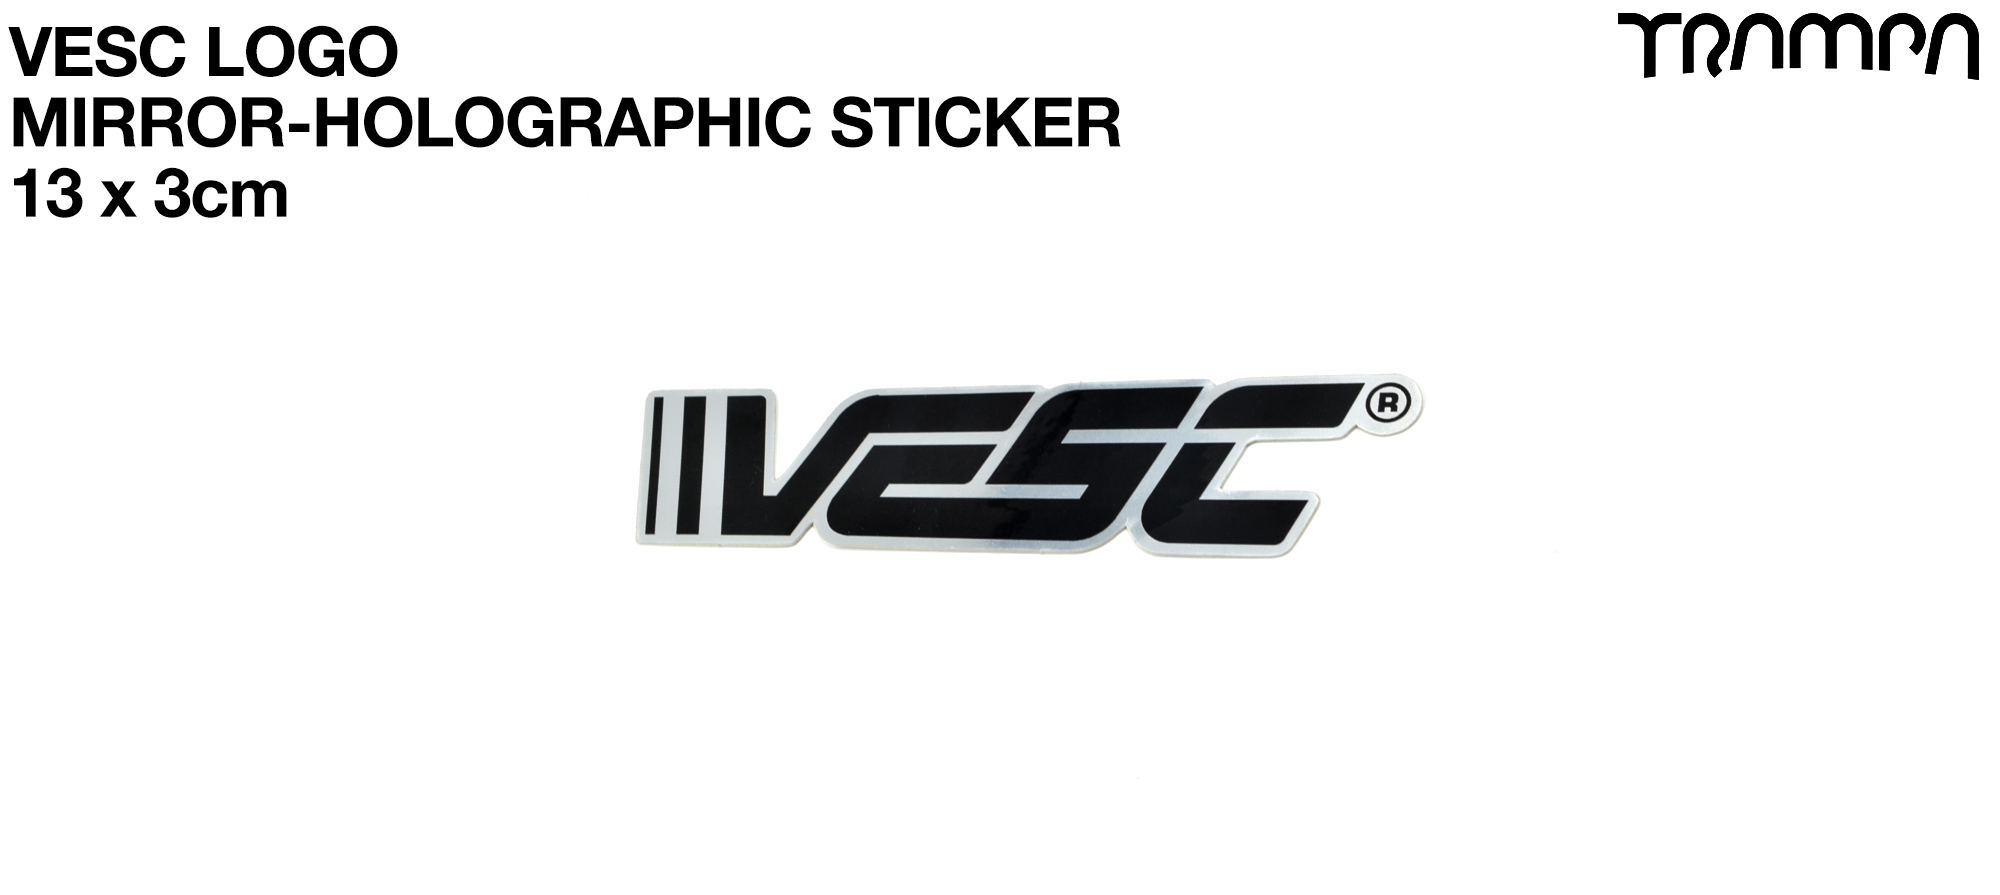 Please give me 2x Holographic VESC Sticker 